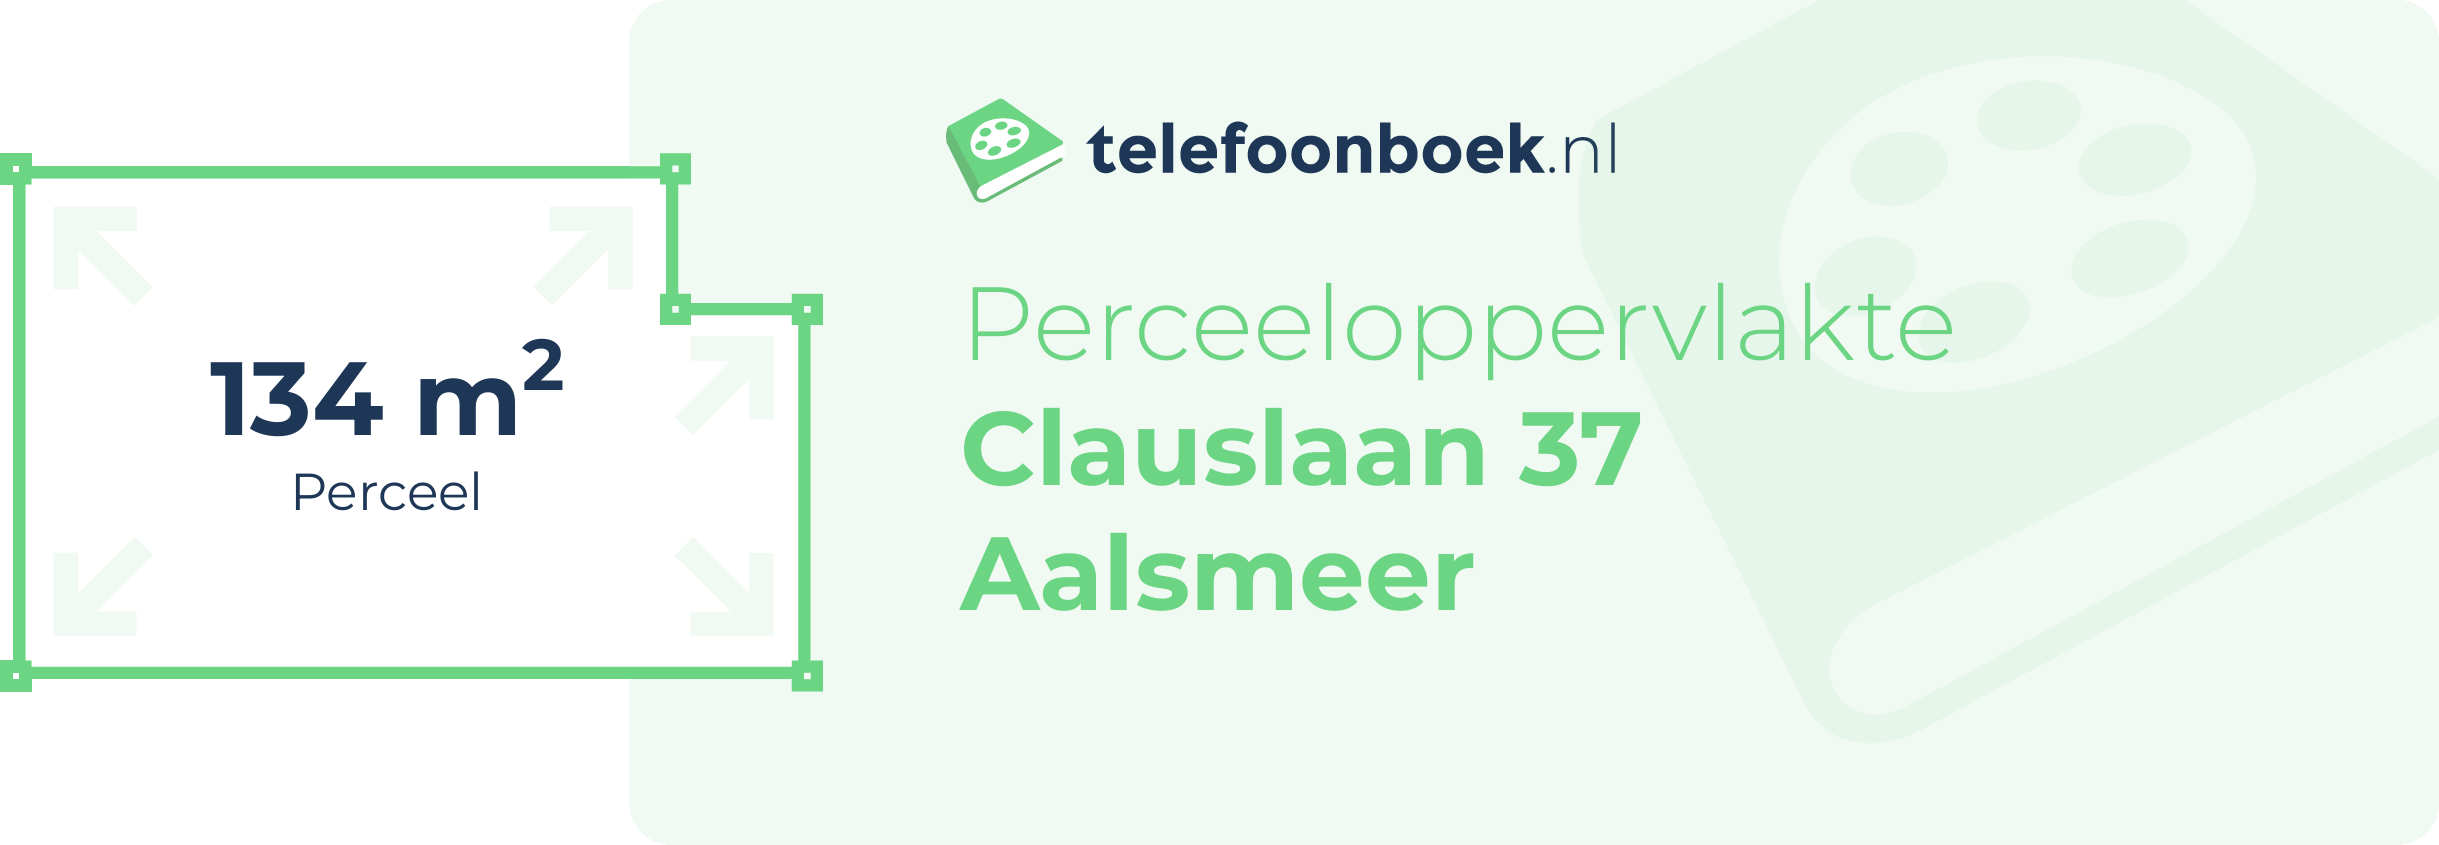 Perceeloppervlakte Clauslaan 37 Aalsmeer